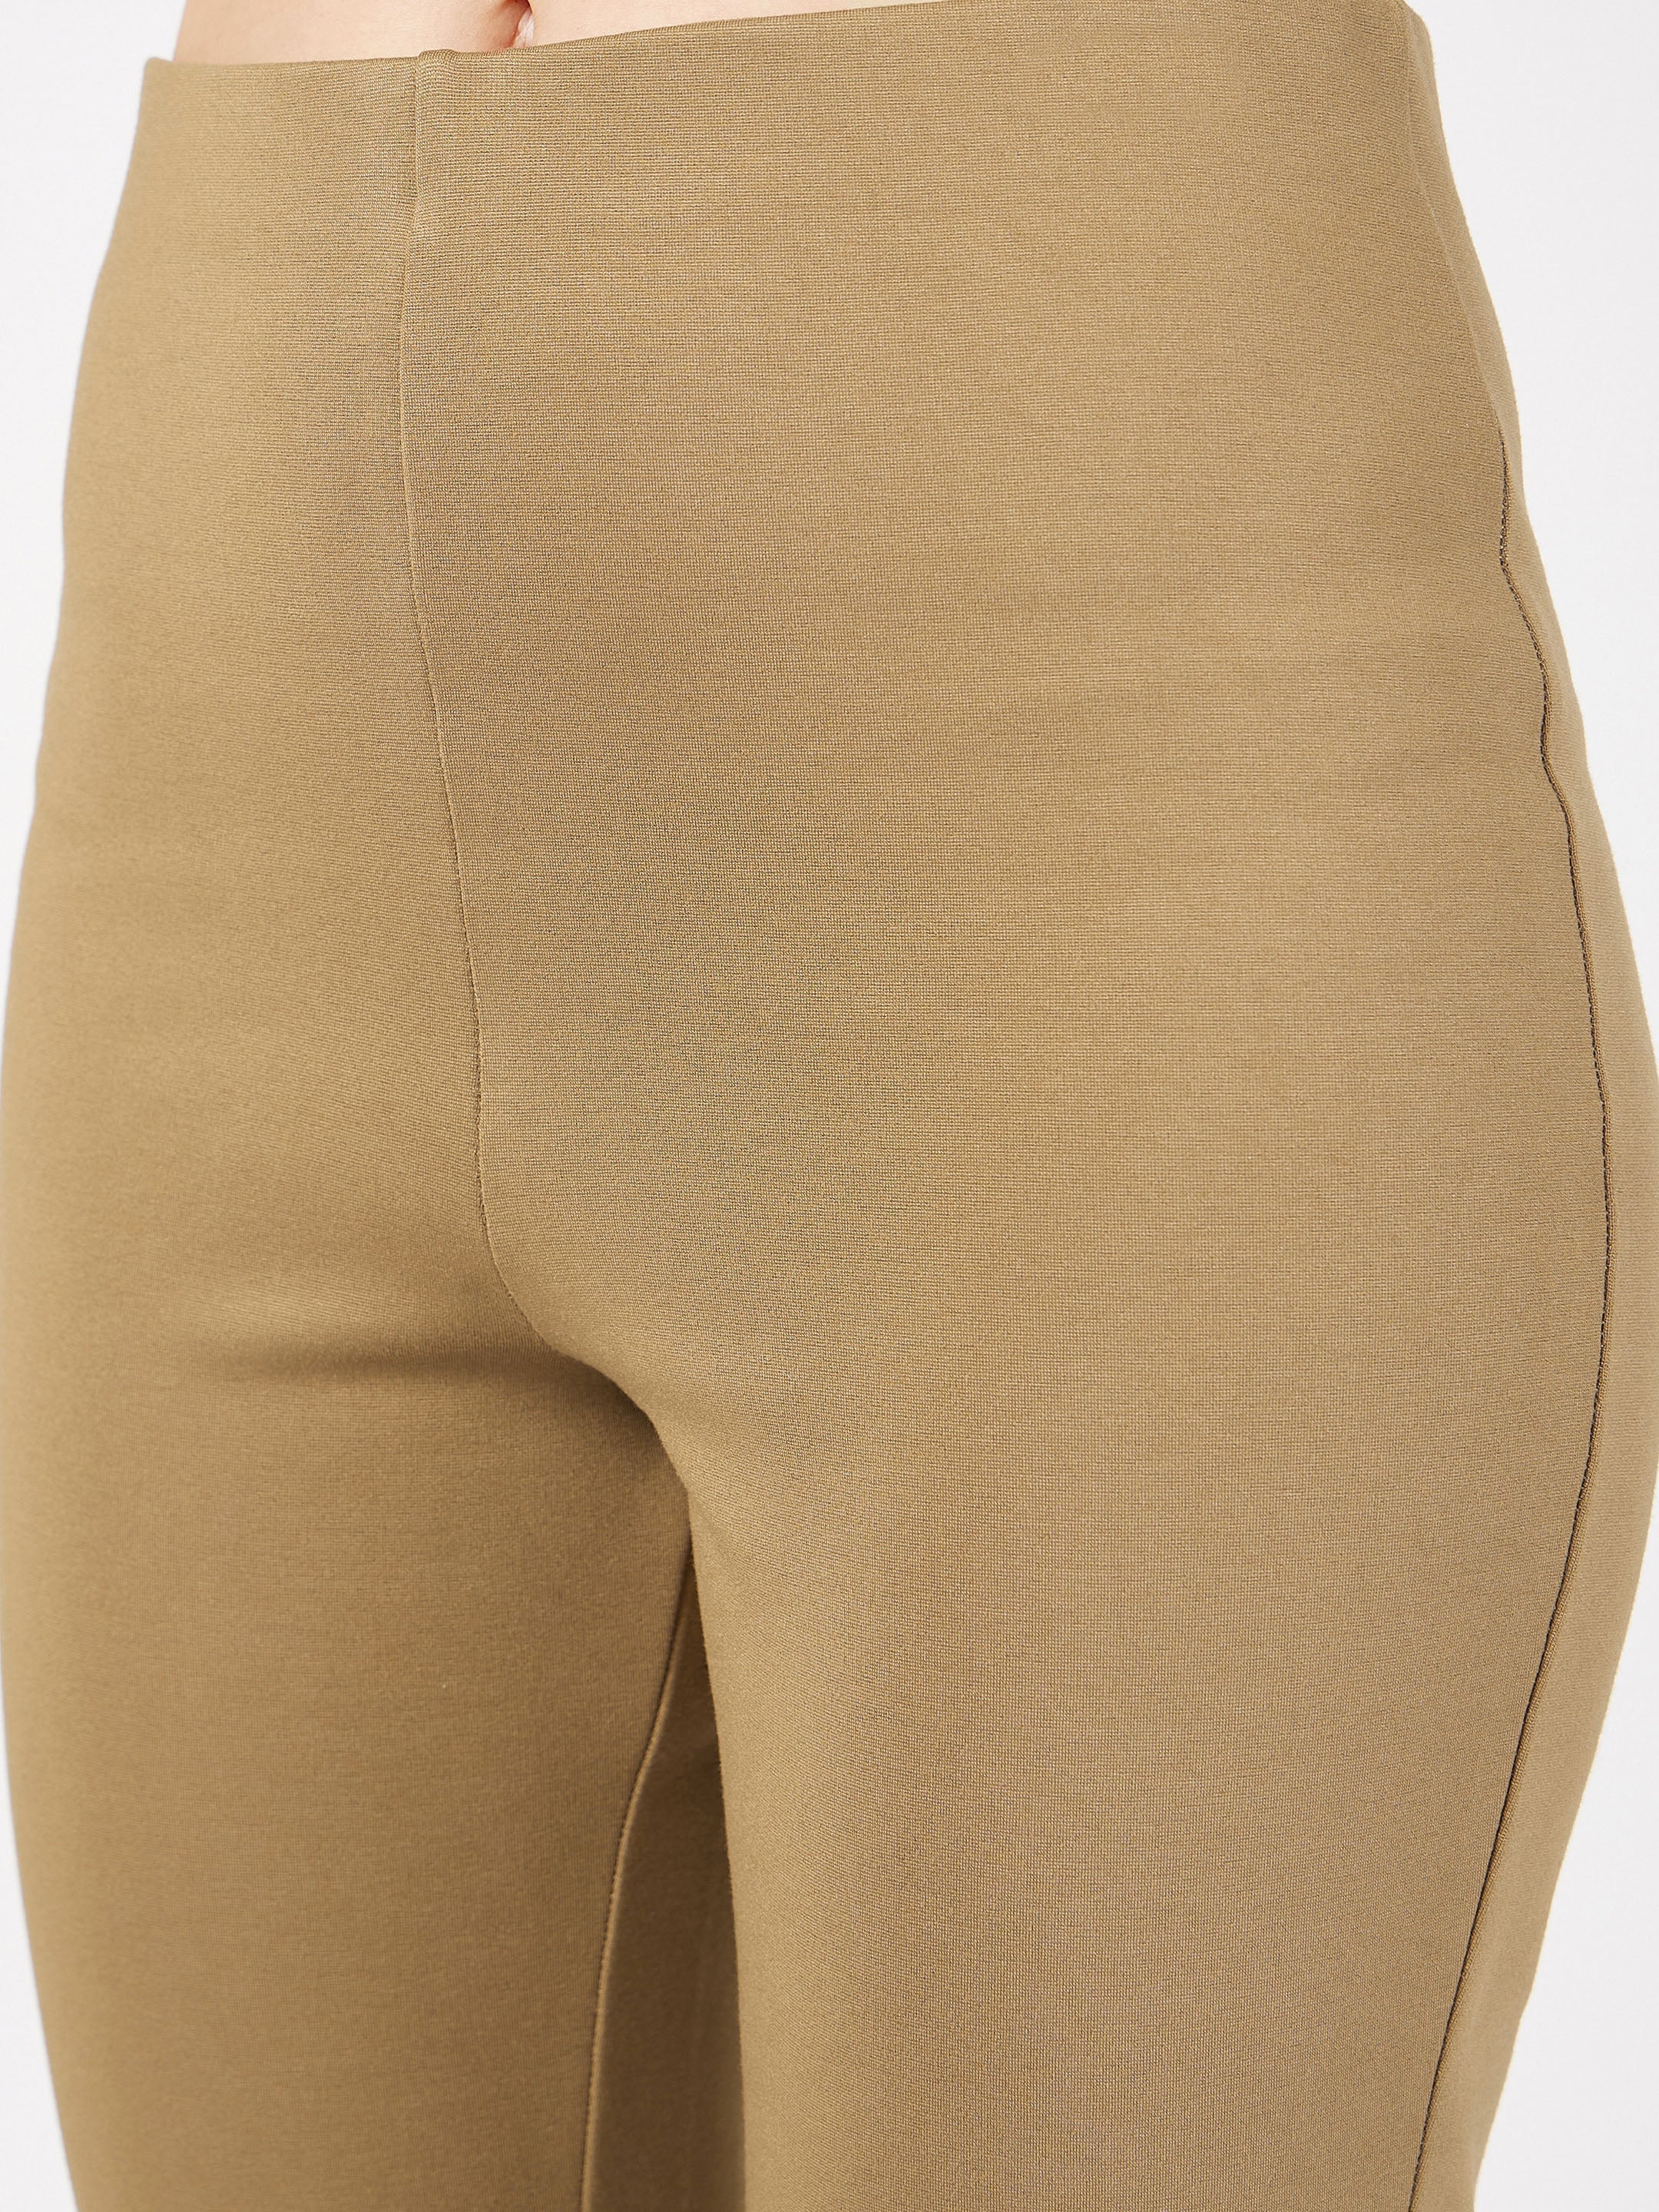 Women's Beige Bell Bottom 4-Way Stretch Pants - Lyush